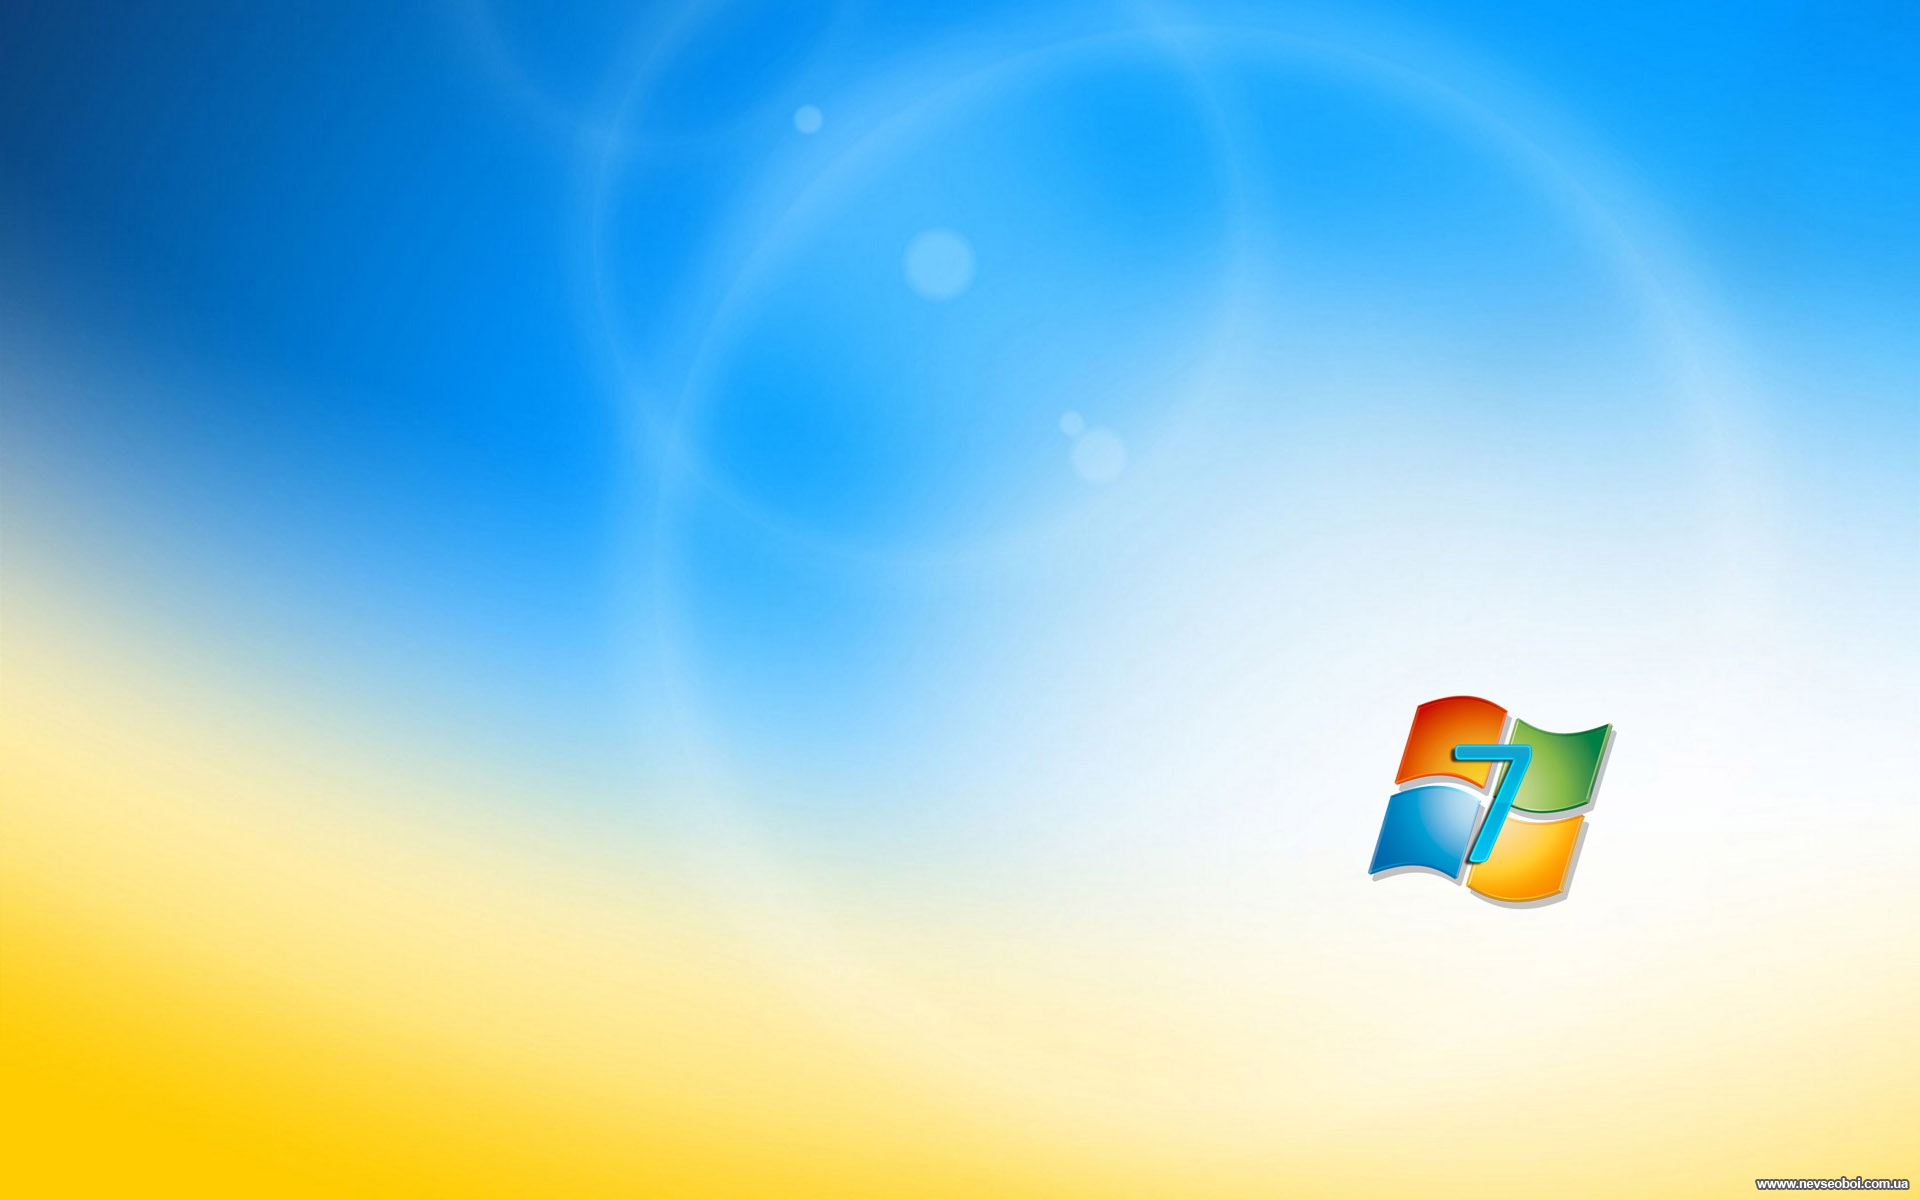 Windows семерка. Windows 7 рабочий стол. Обои Windows 7. Заставка Windows. Картинки в стиле виндовс.